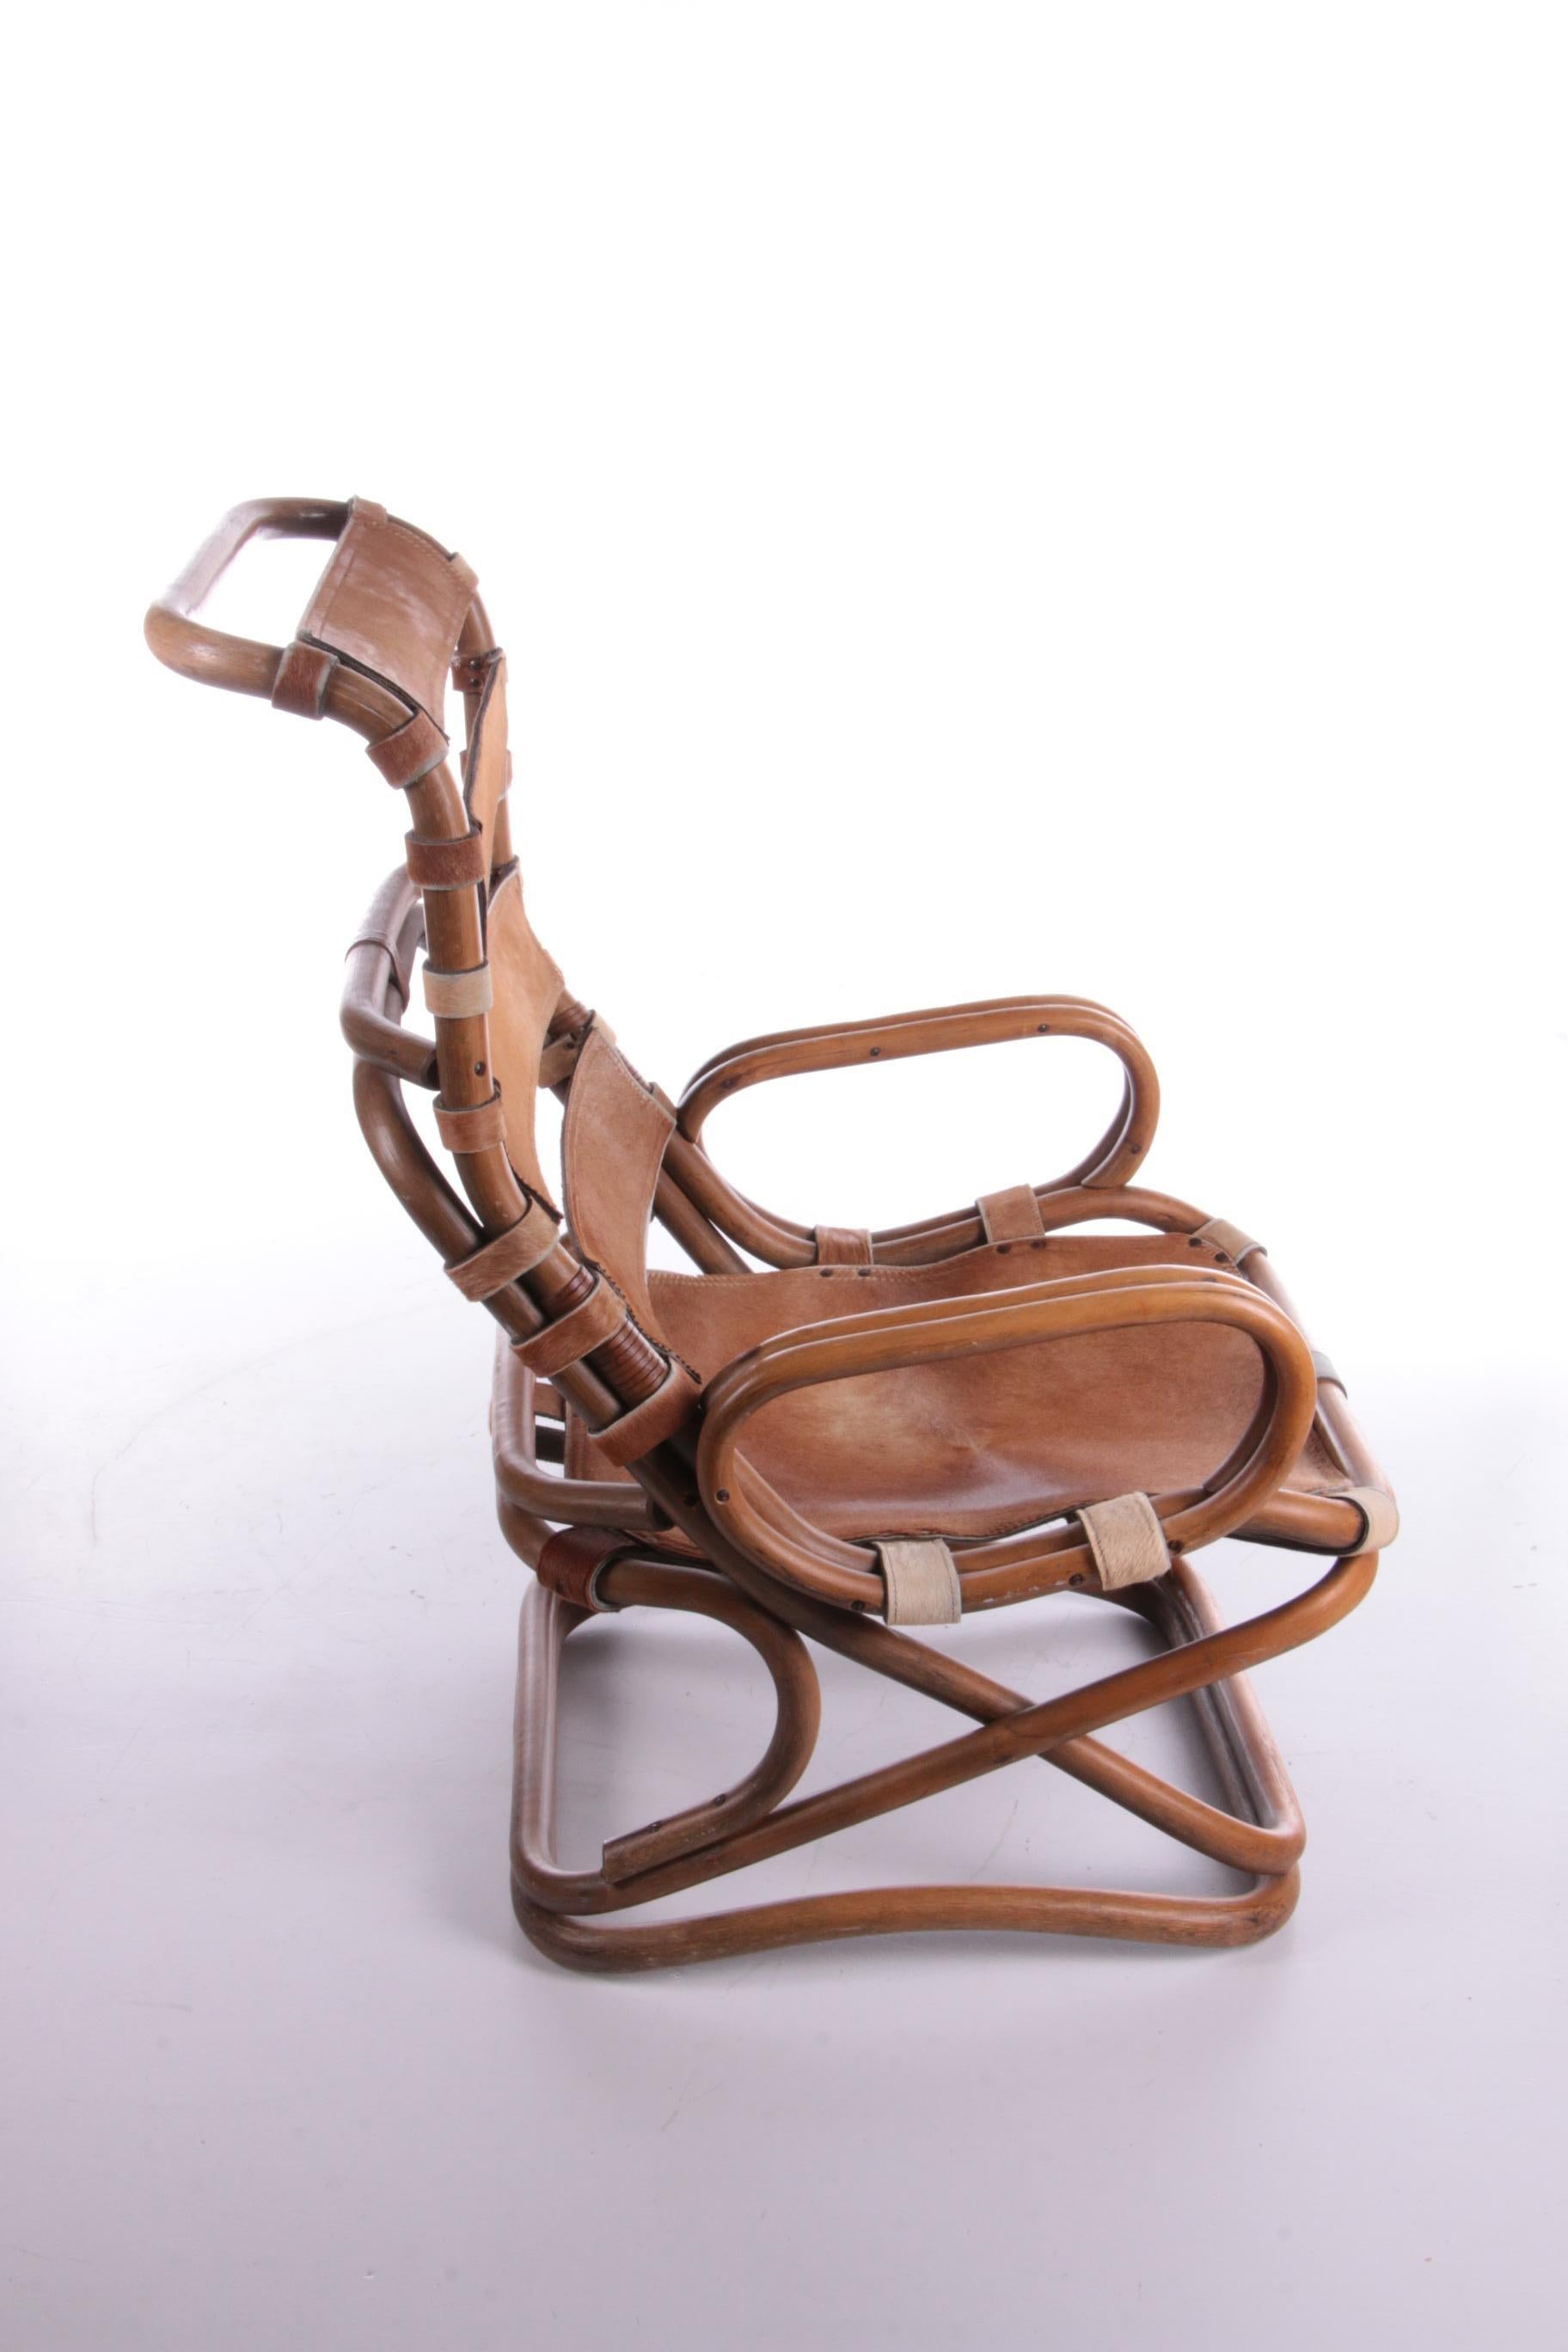 Cuir Chaise de relax Tito Agnoli en bambou et cuir, 1960 en vente